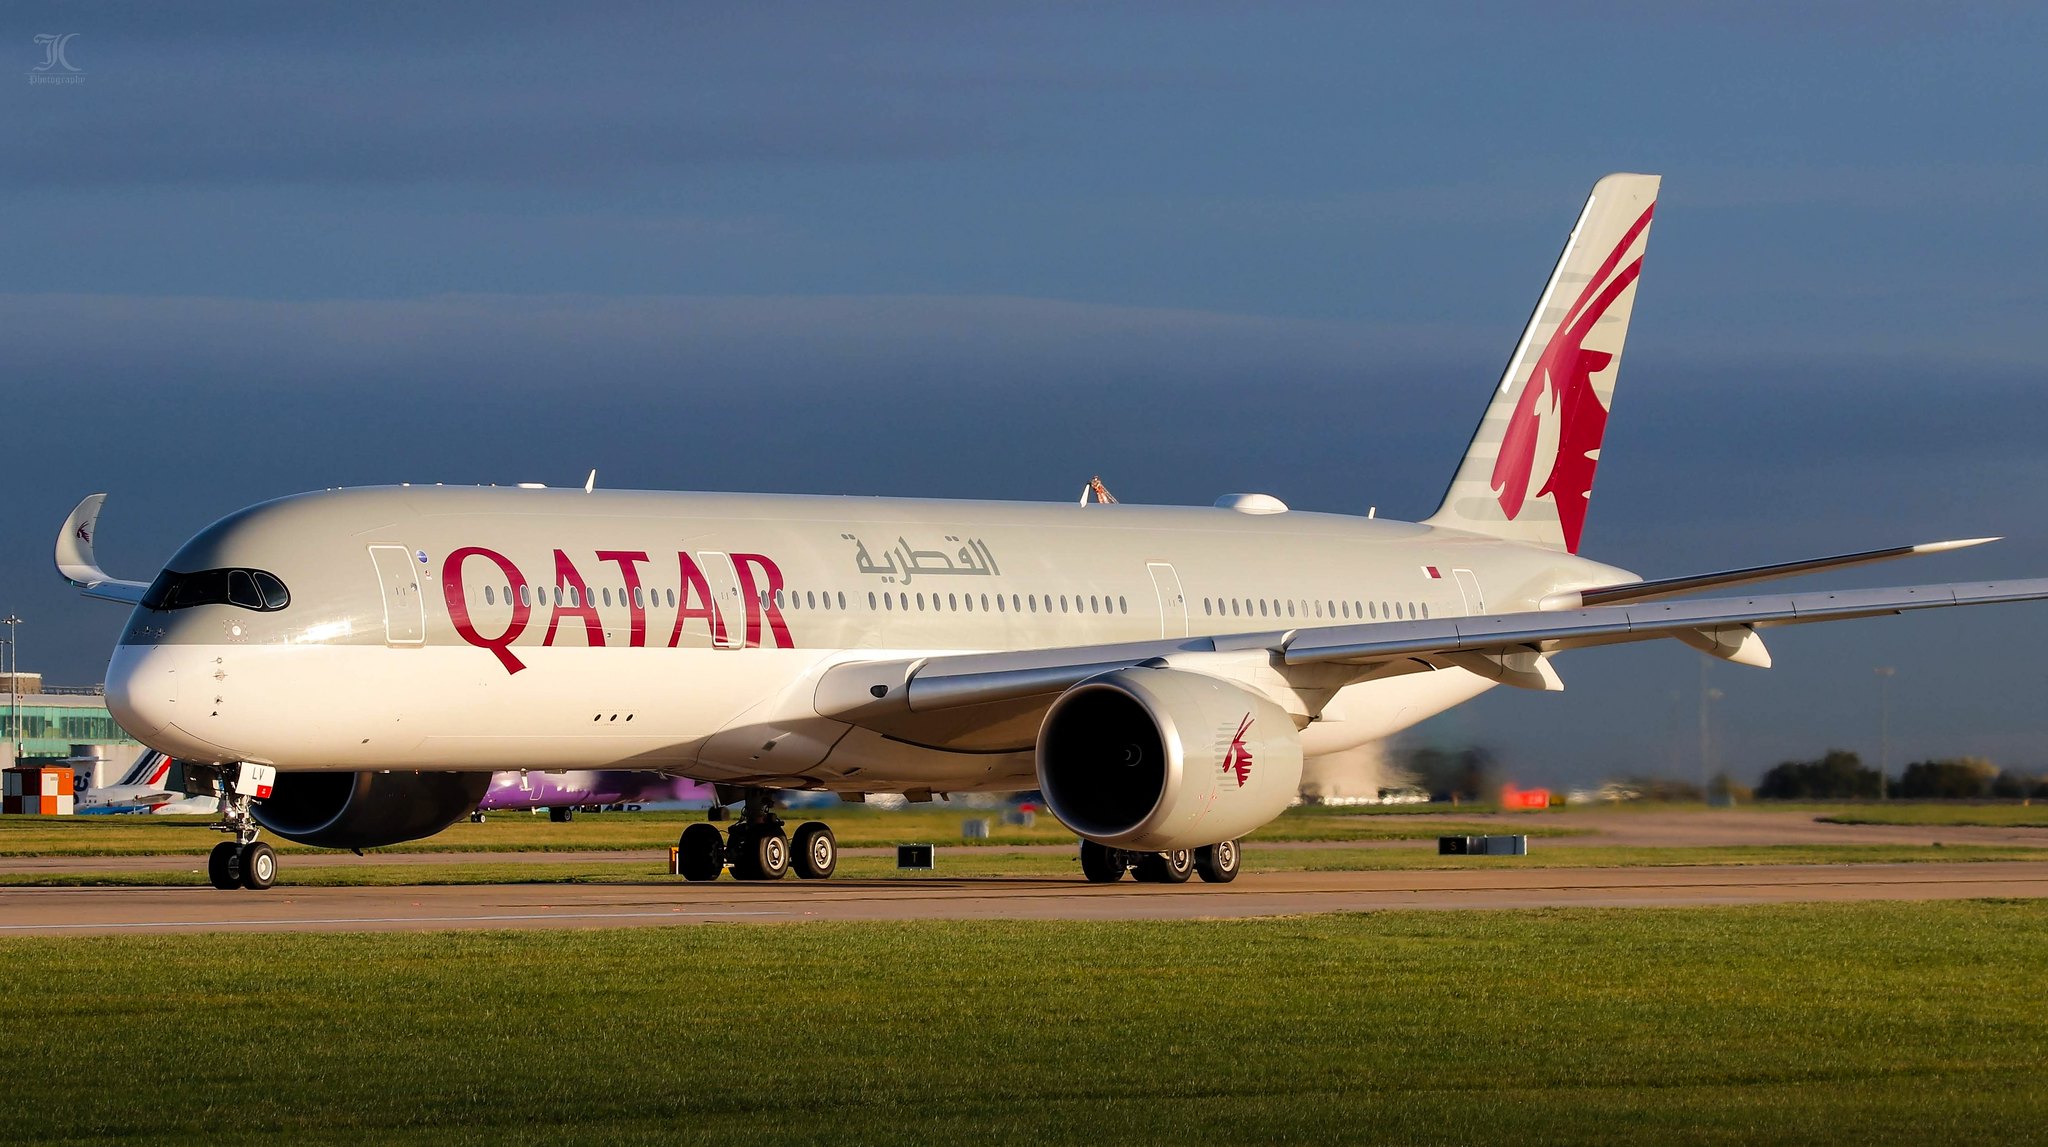 Qatar Airways Reports $632 Million Loss